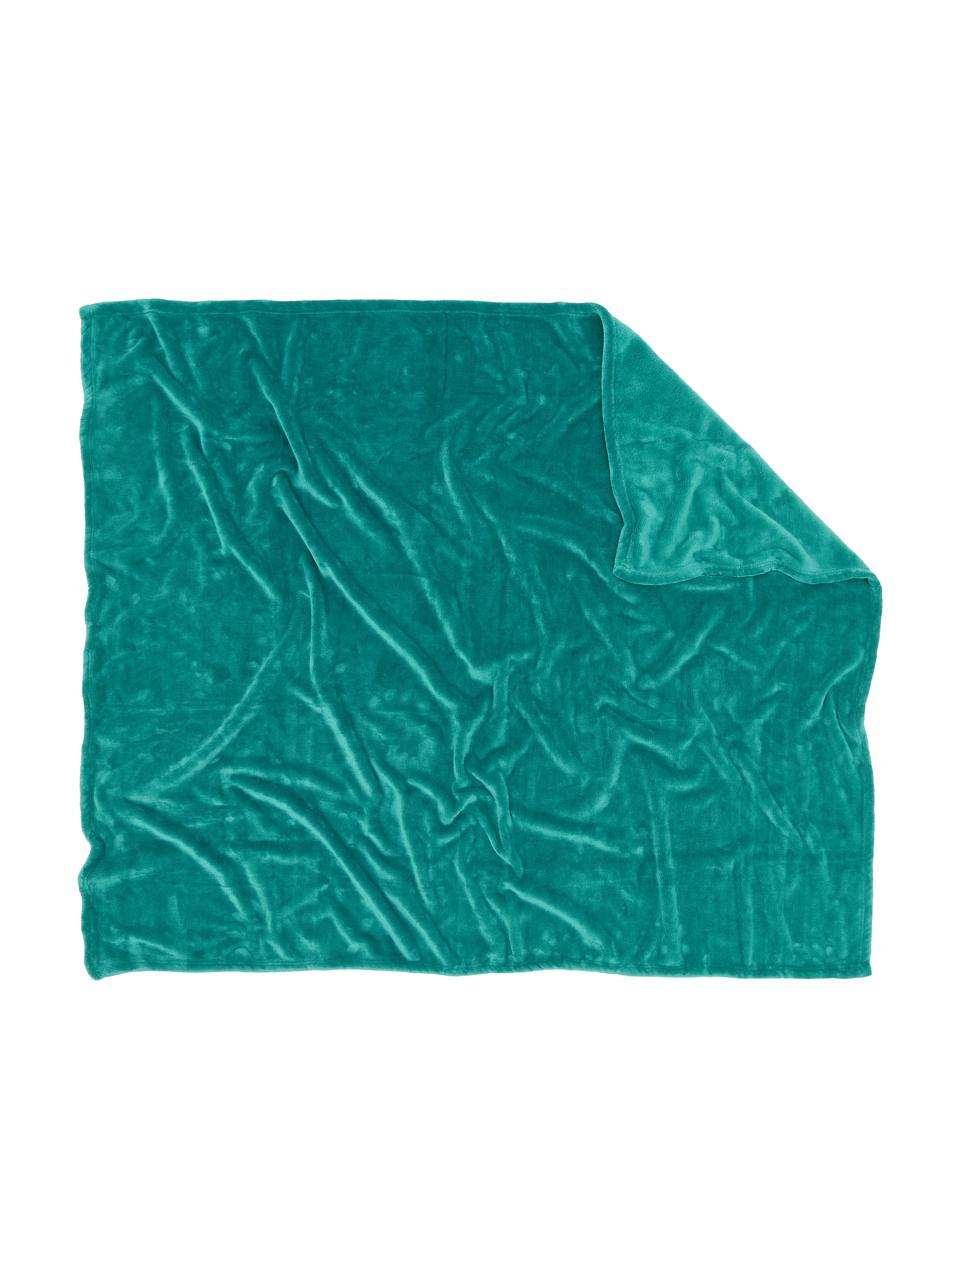 Coperta soffice color turchese Doudou, 100% poliestere, Turchese, Larg. 130 x Lung. 160 cm